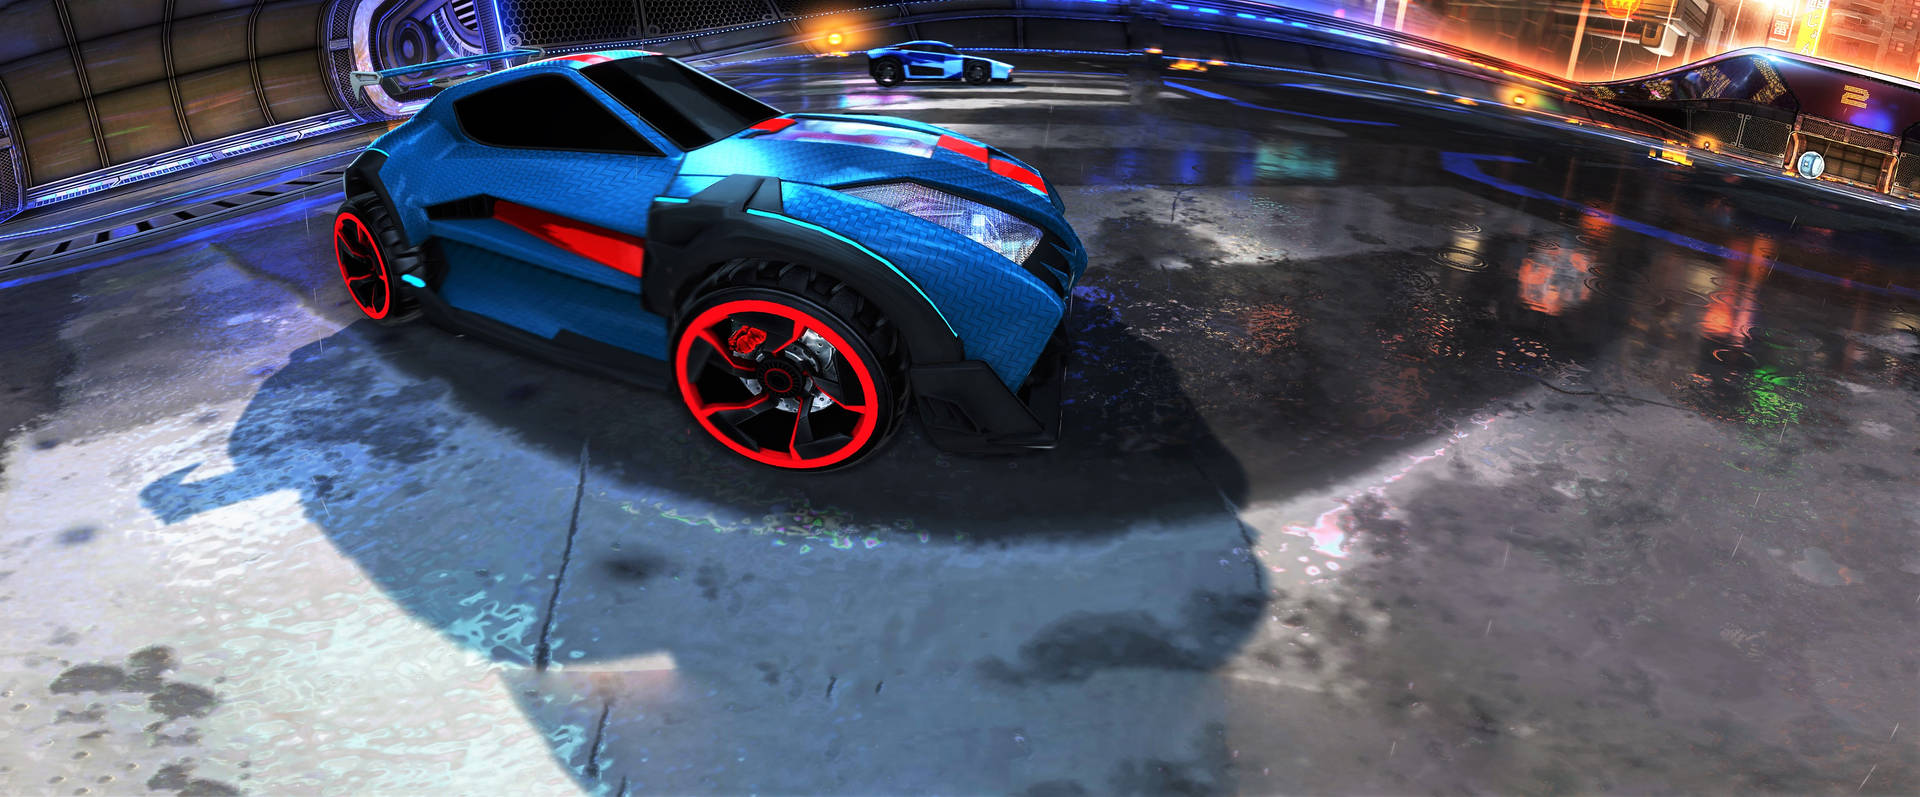 Blue Rocket League Car 2k Wallpaper